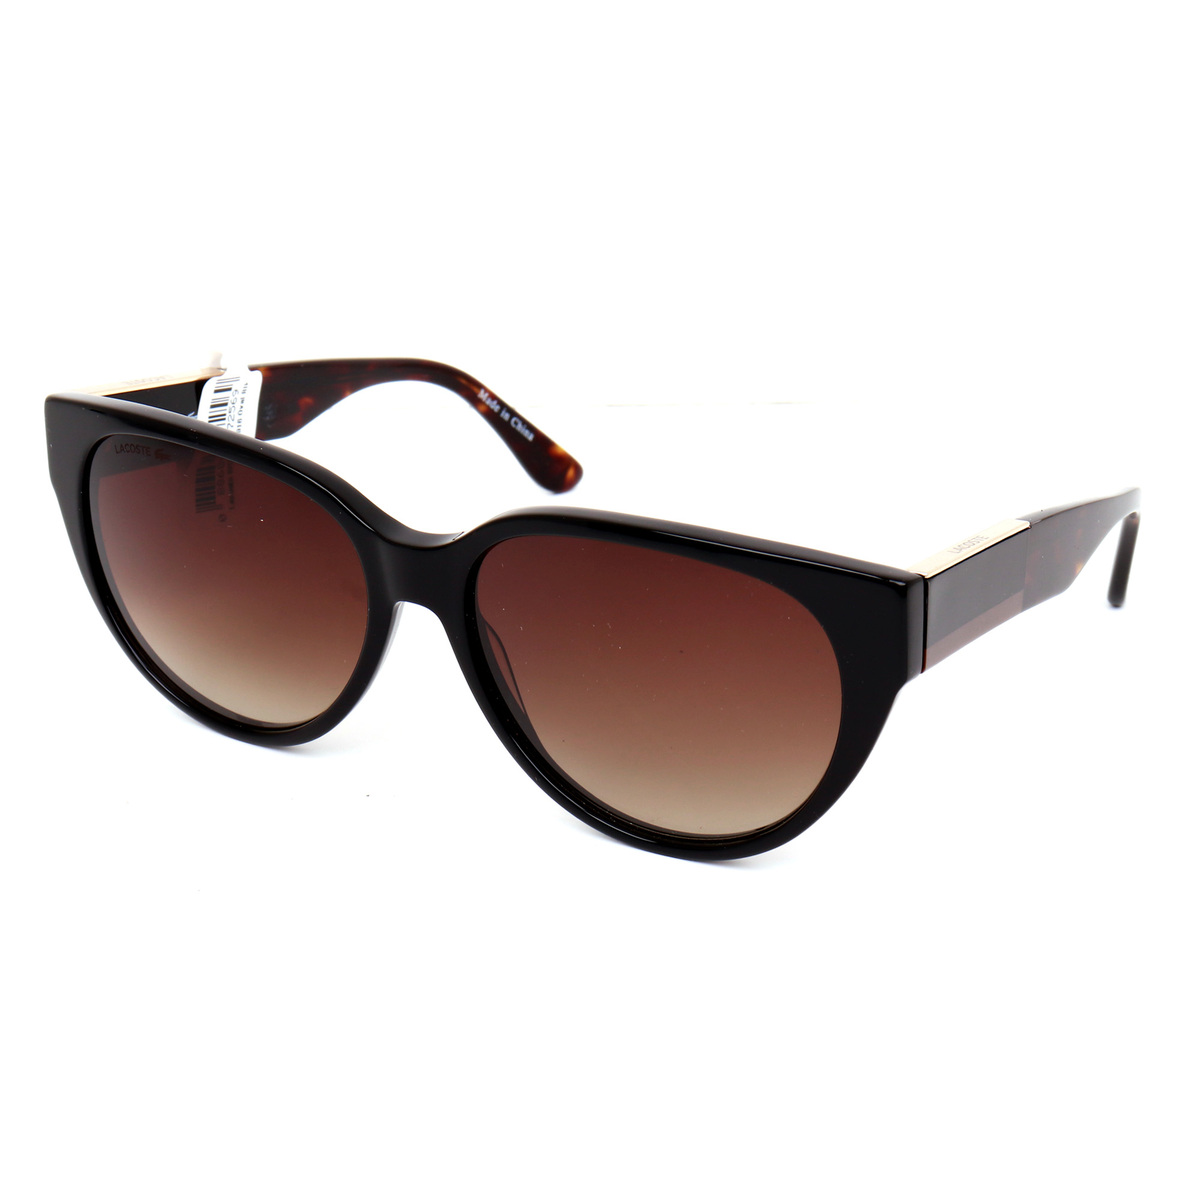 Lacoste Women's Oval Sunglasses, Brown, 985S5916